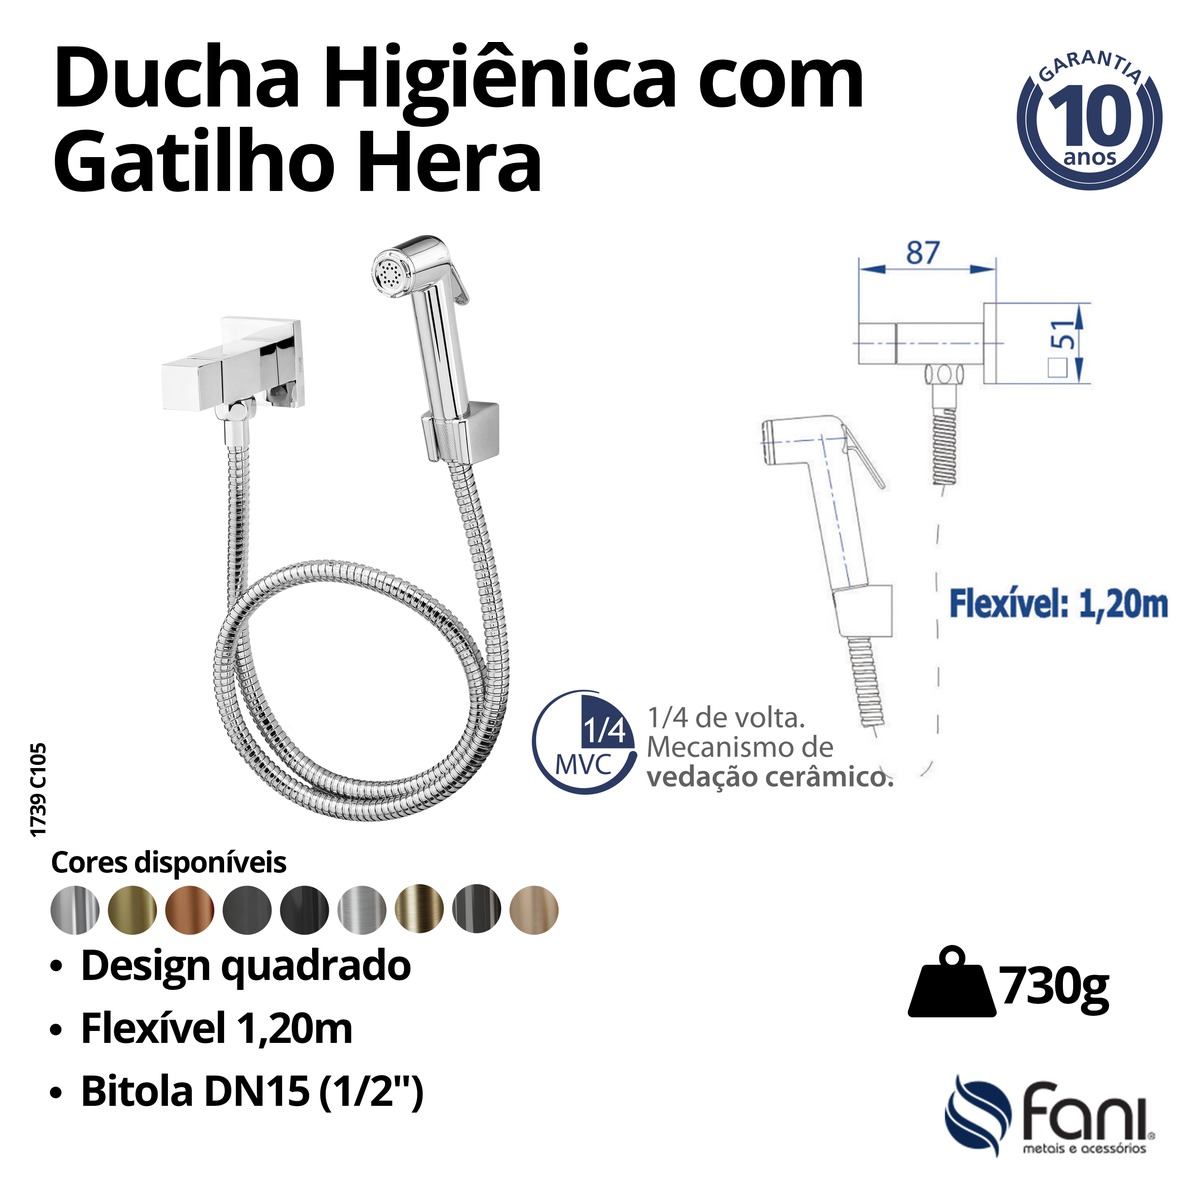 Ducha Higiênica Gatilho ABS Hera 1739DV105 D'oro Vecchio Fani